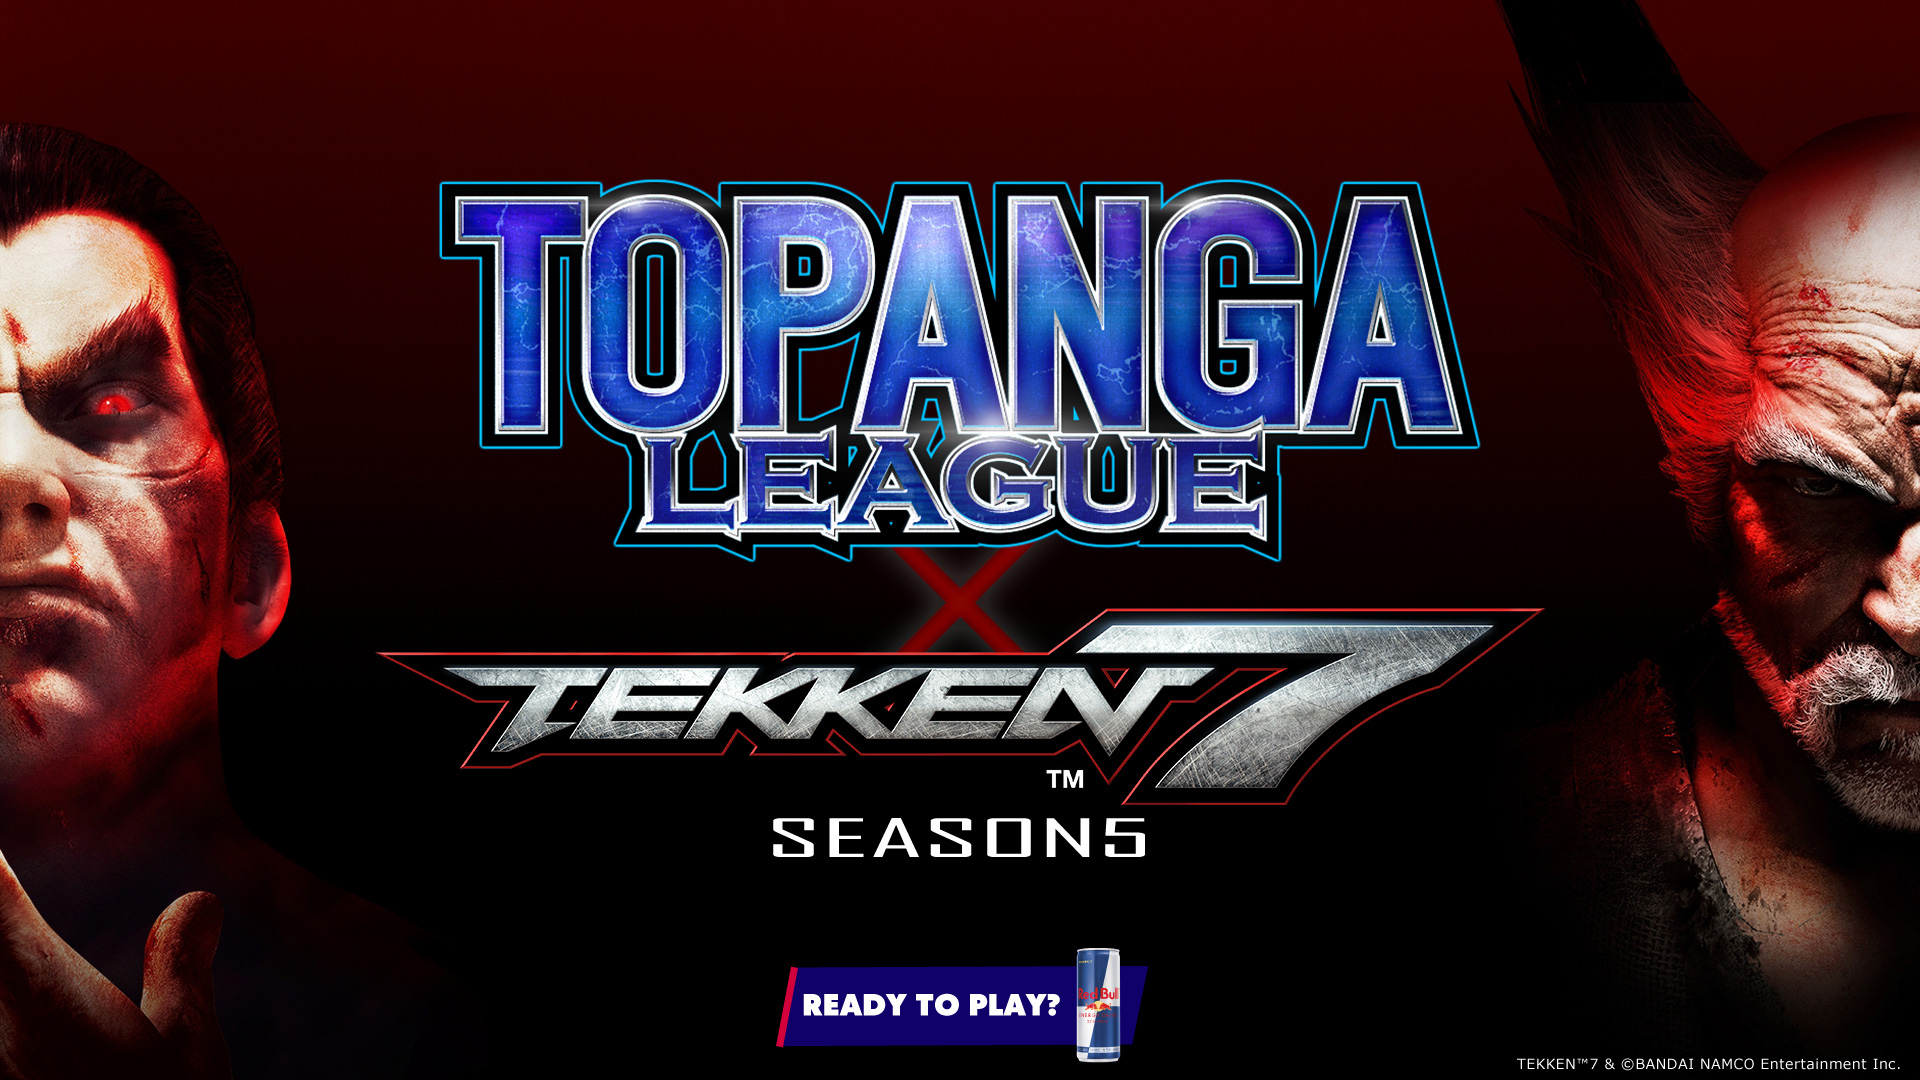 TOPANGA LEAGUE x TEKKEN7 Season5